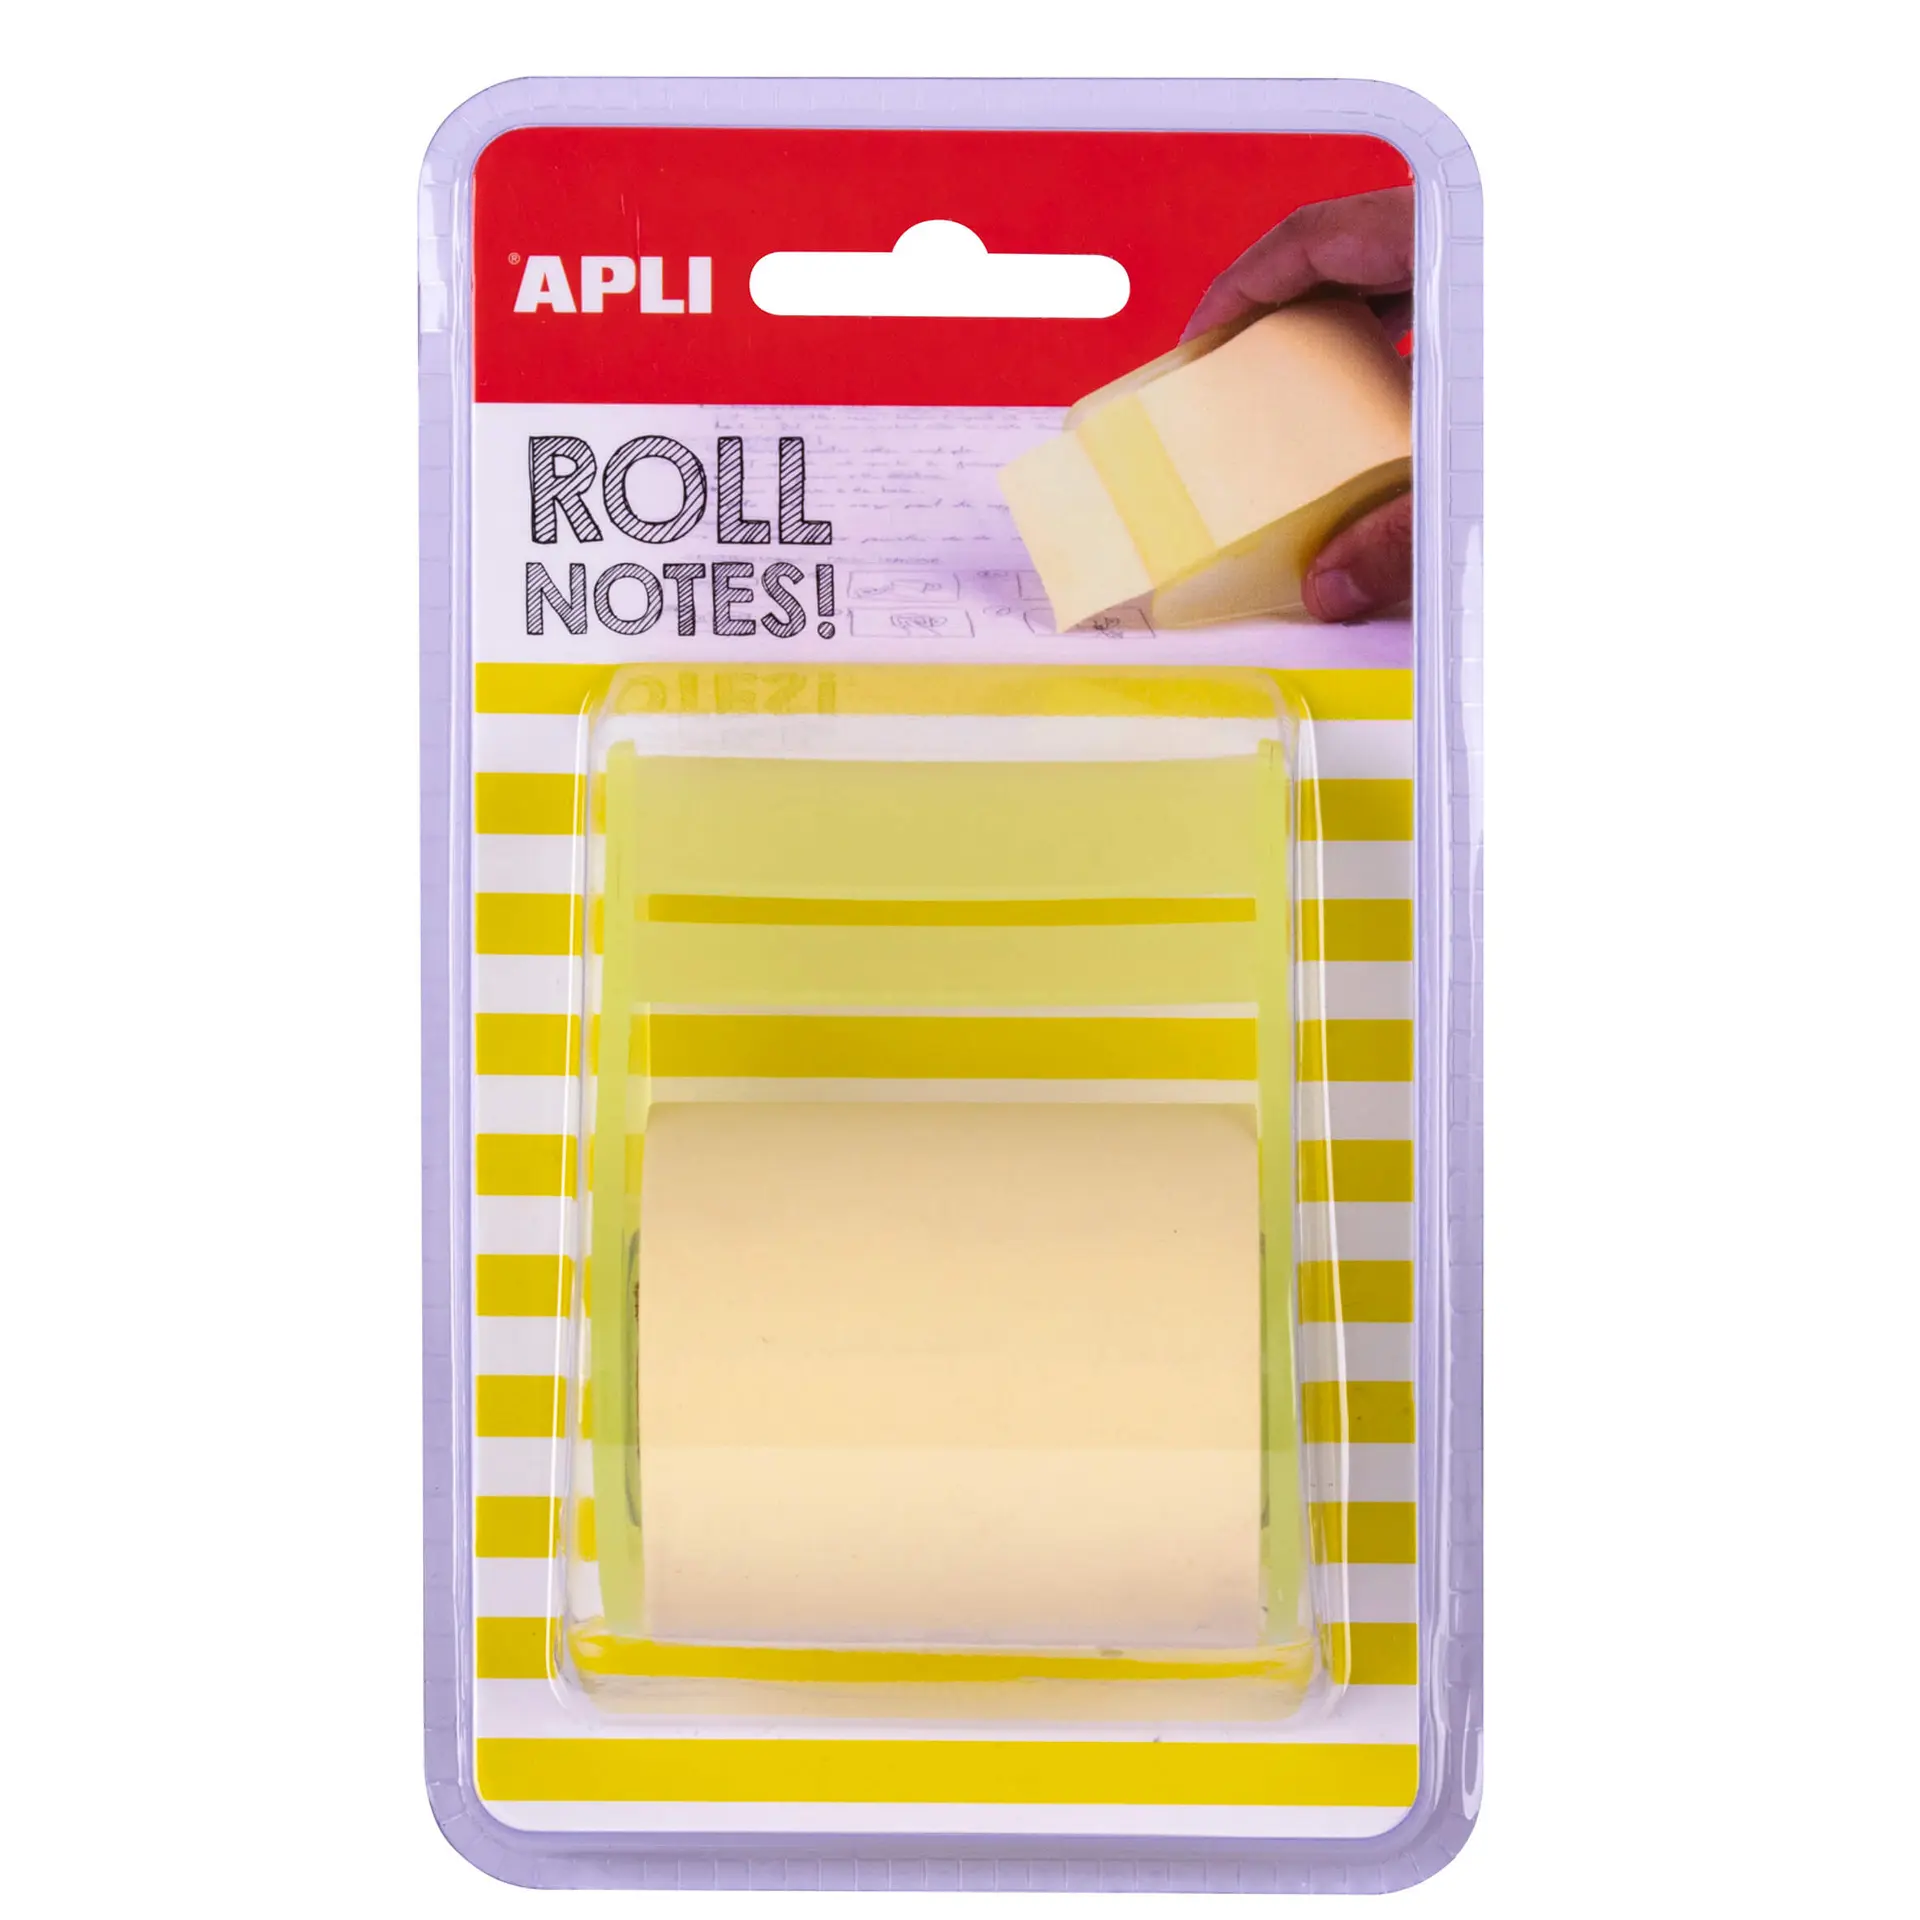 Apli Dispensador Nota Adhesiva Rollo - 50mm x 8m - Facil de Usar - Adhesivo de Calidad - Amarillo Pa